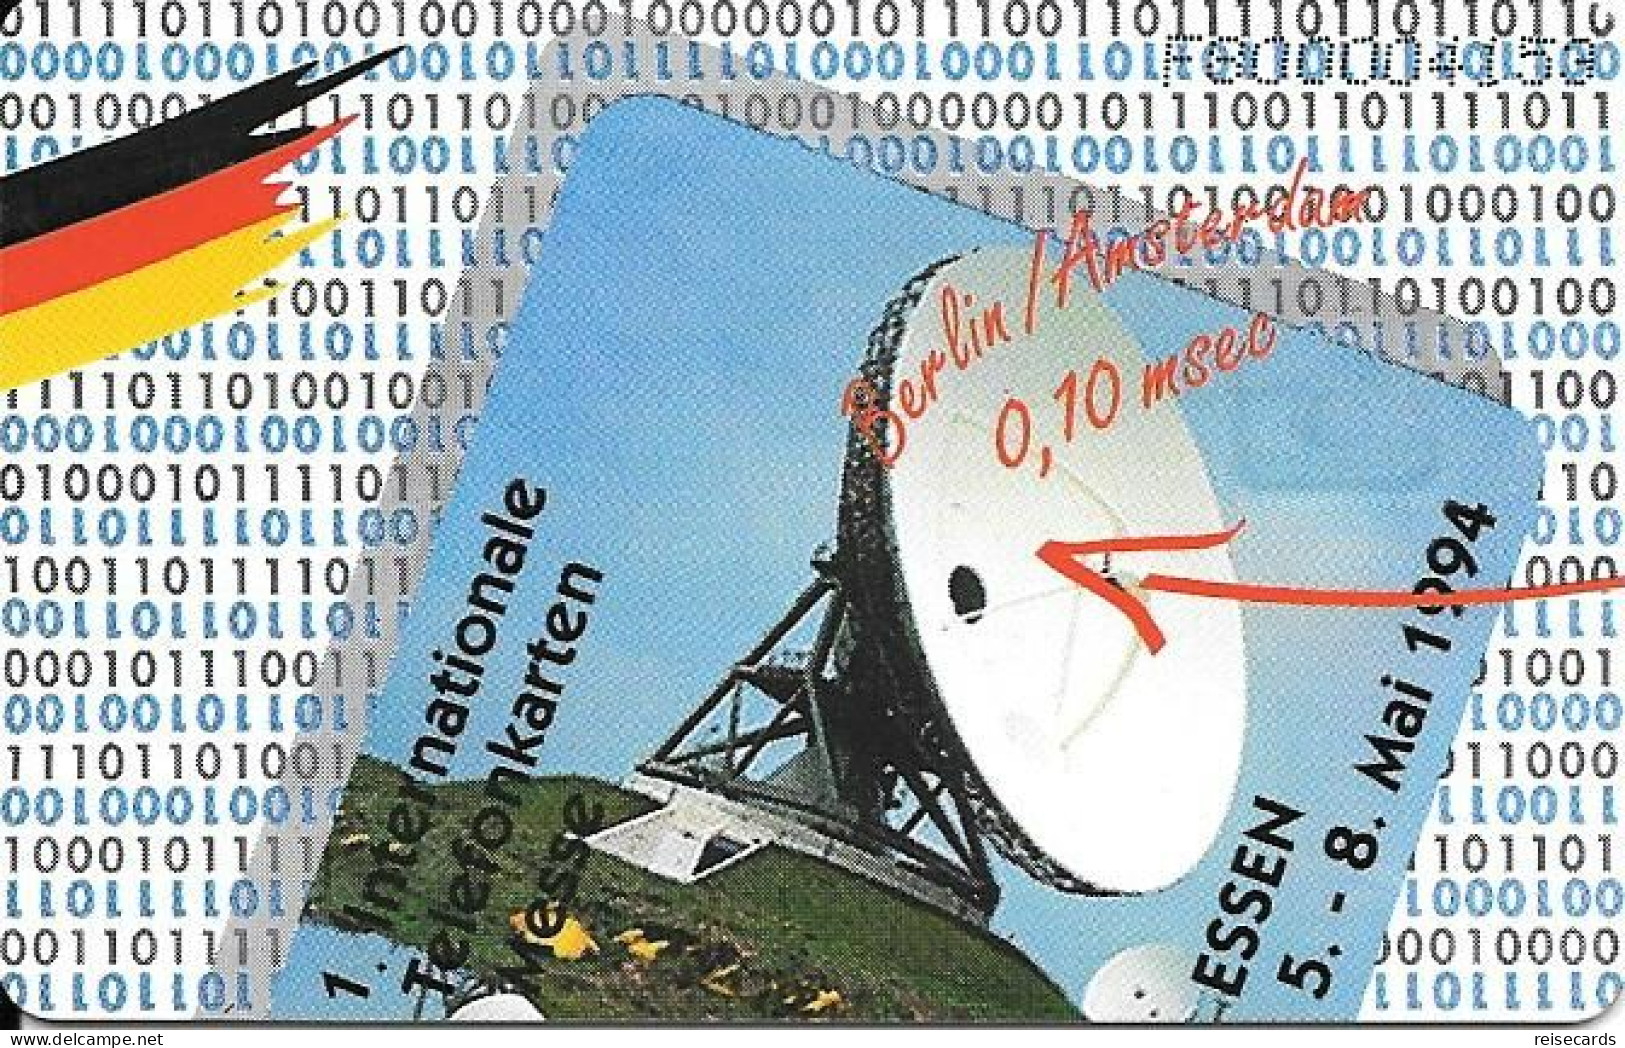 Netherlands: Ptt Telecom - 1994 1. Internationale Telefoonkaarten Beurs 94 Essen. Mint - Publiques